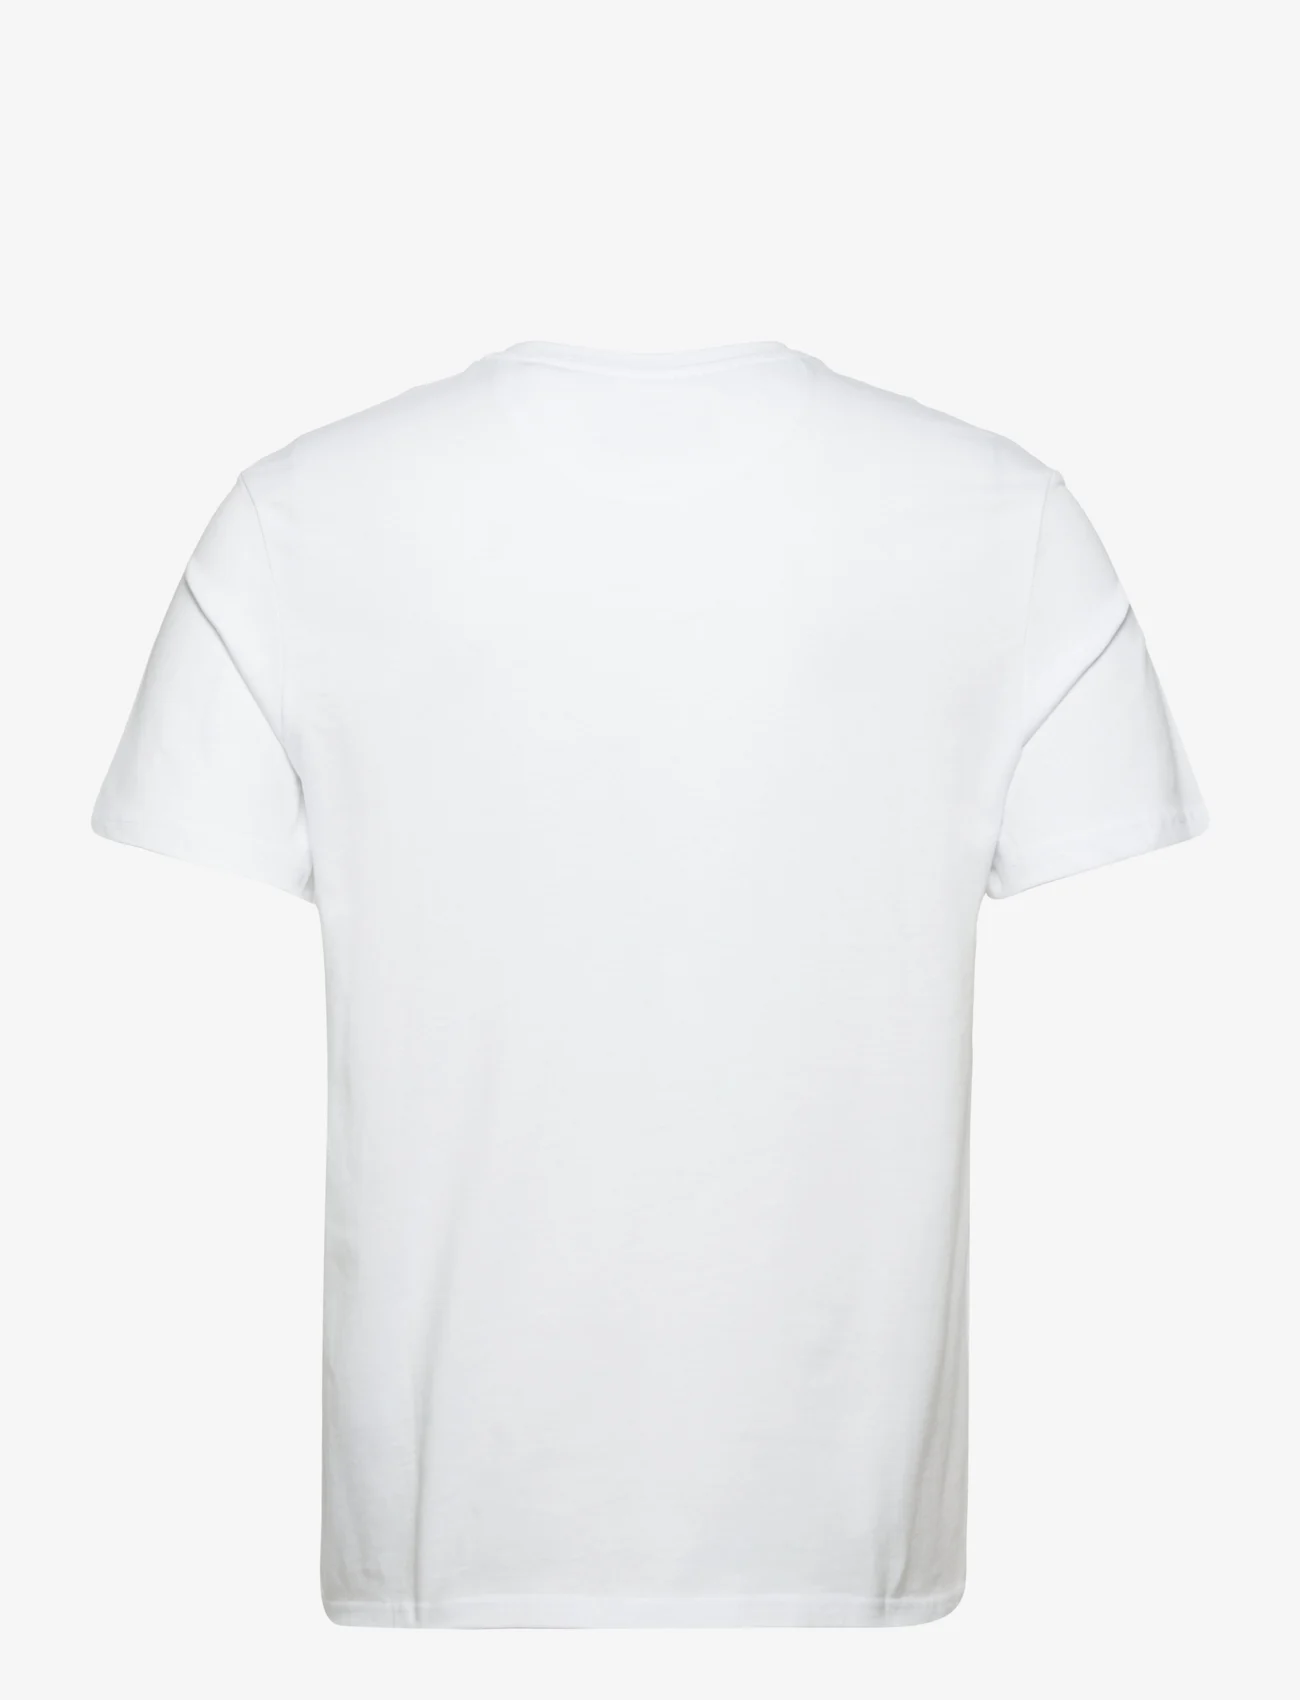 Lyle & Scott - Contrast Pocket T-Shirt - najniższe ceny - white/ navy - 1